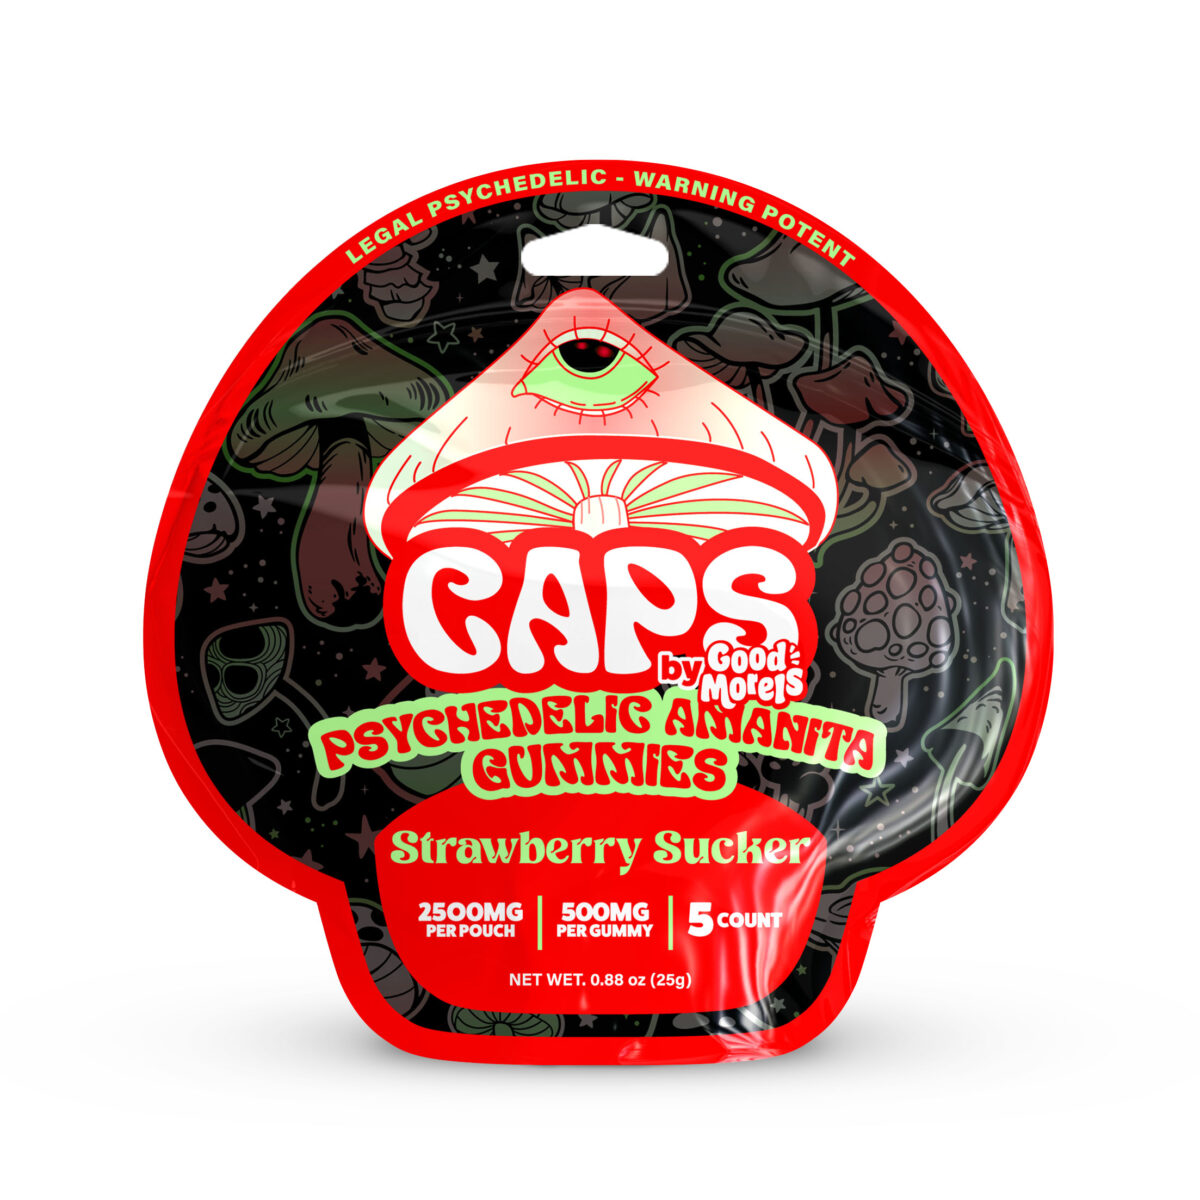 CAPS Mushroom Amanita Gummies Strawberry Sucker – 5ct